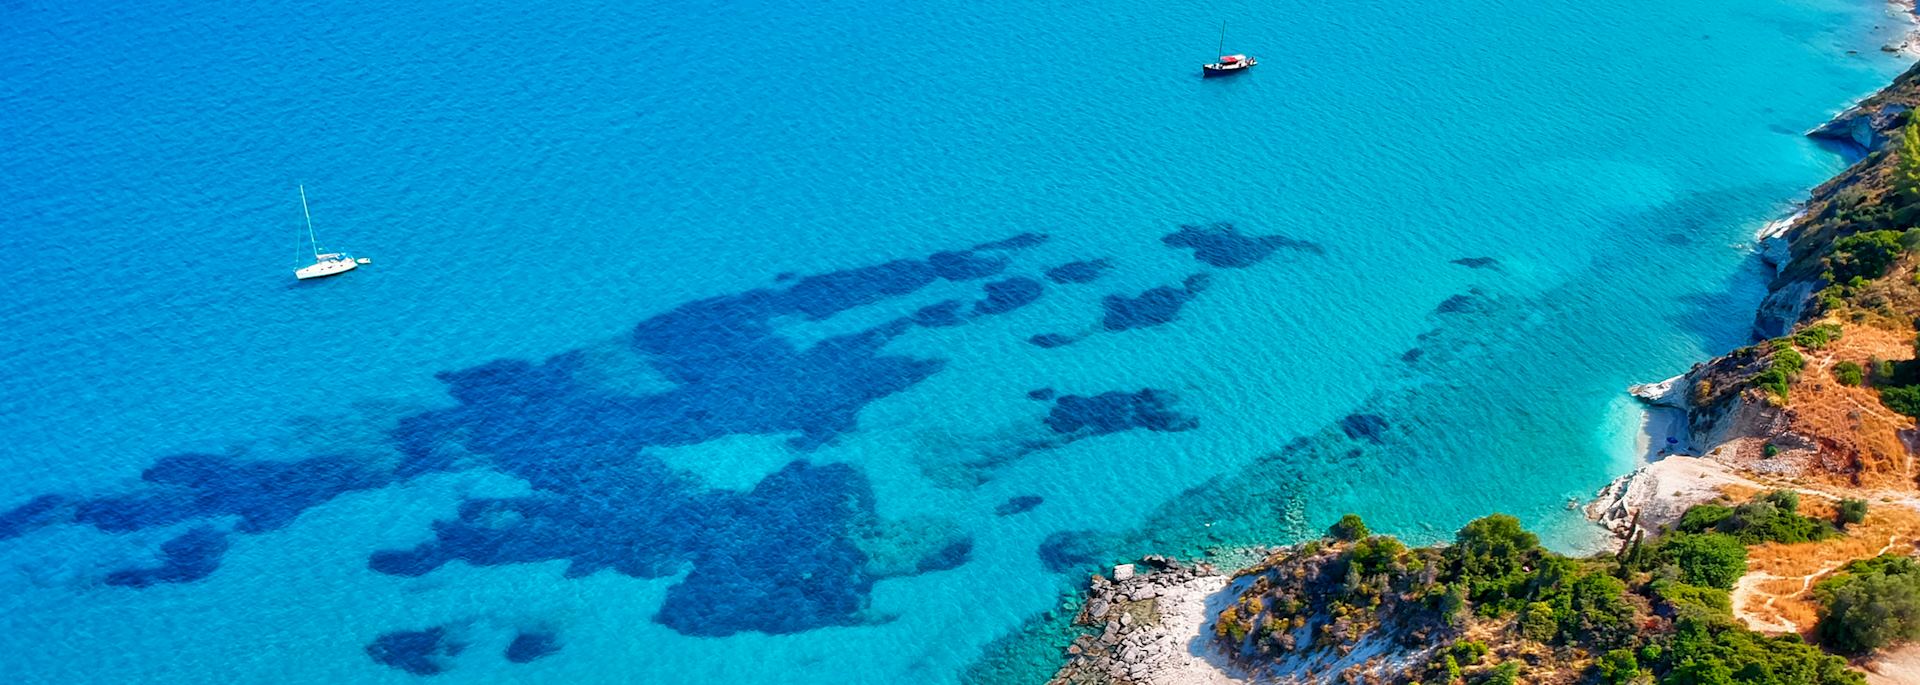 Aerial view of Bahamas coastline